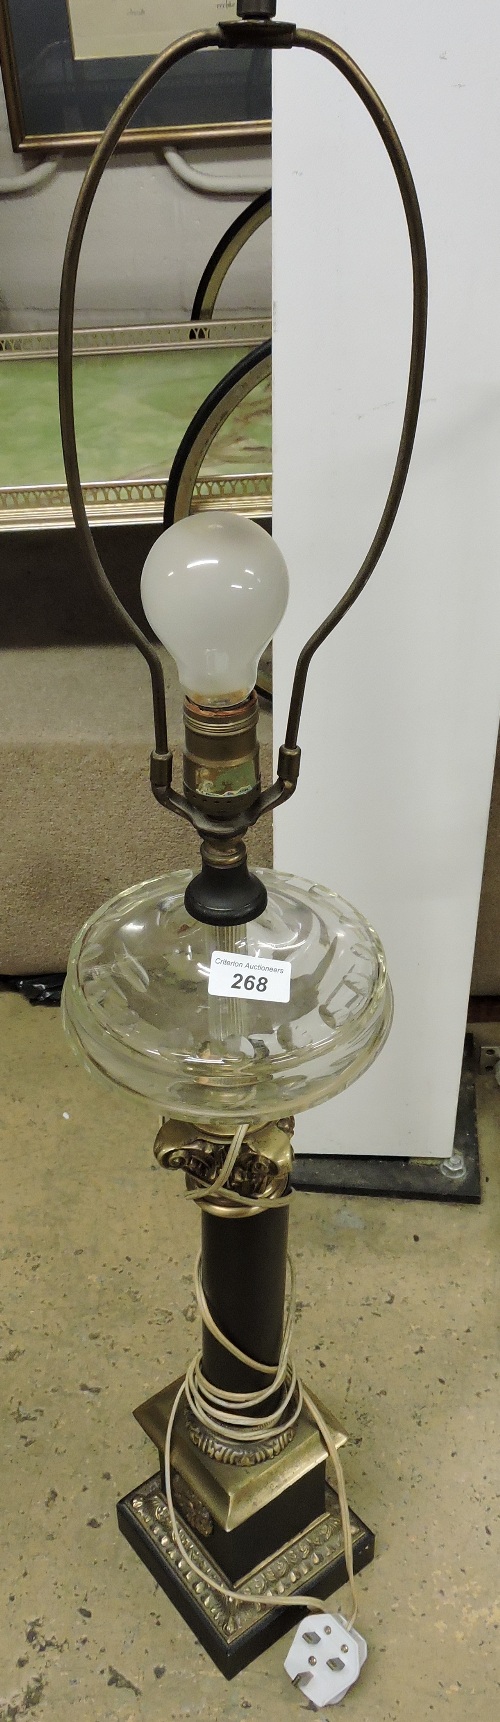 A 19th Century Corinthian column table lamp with glass reservoir